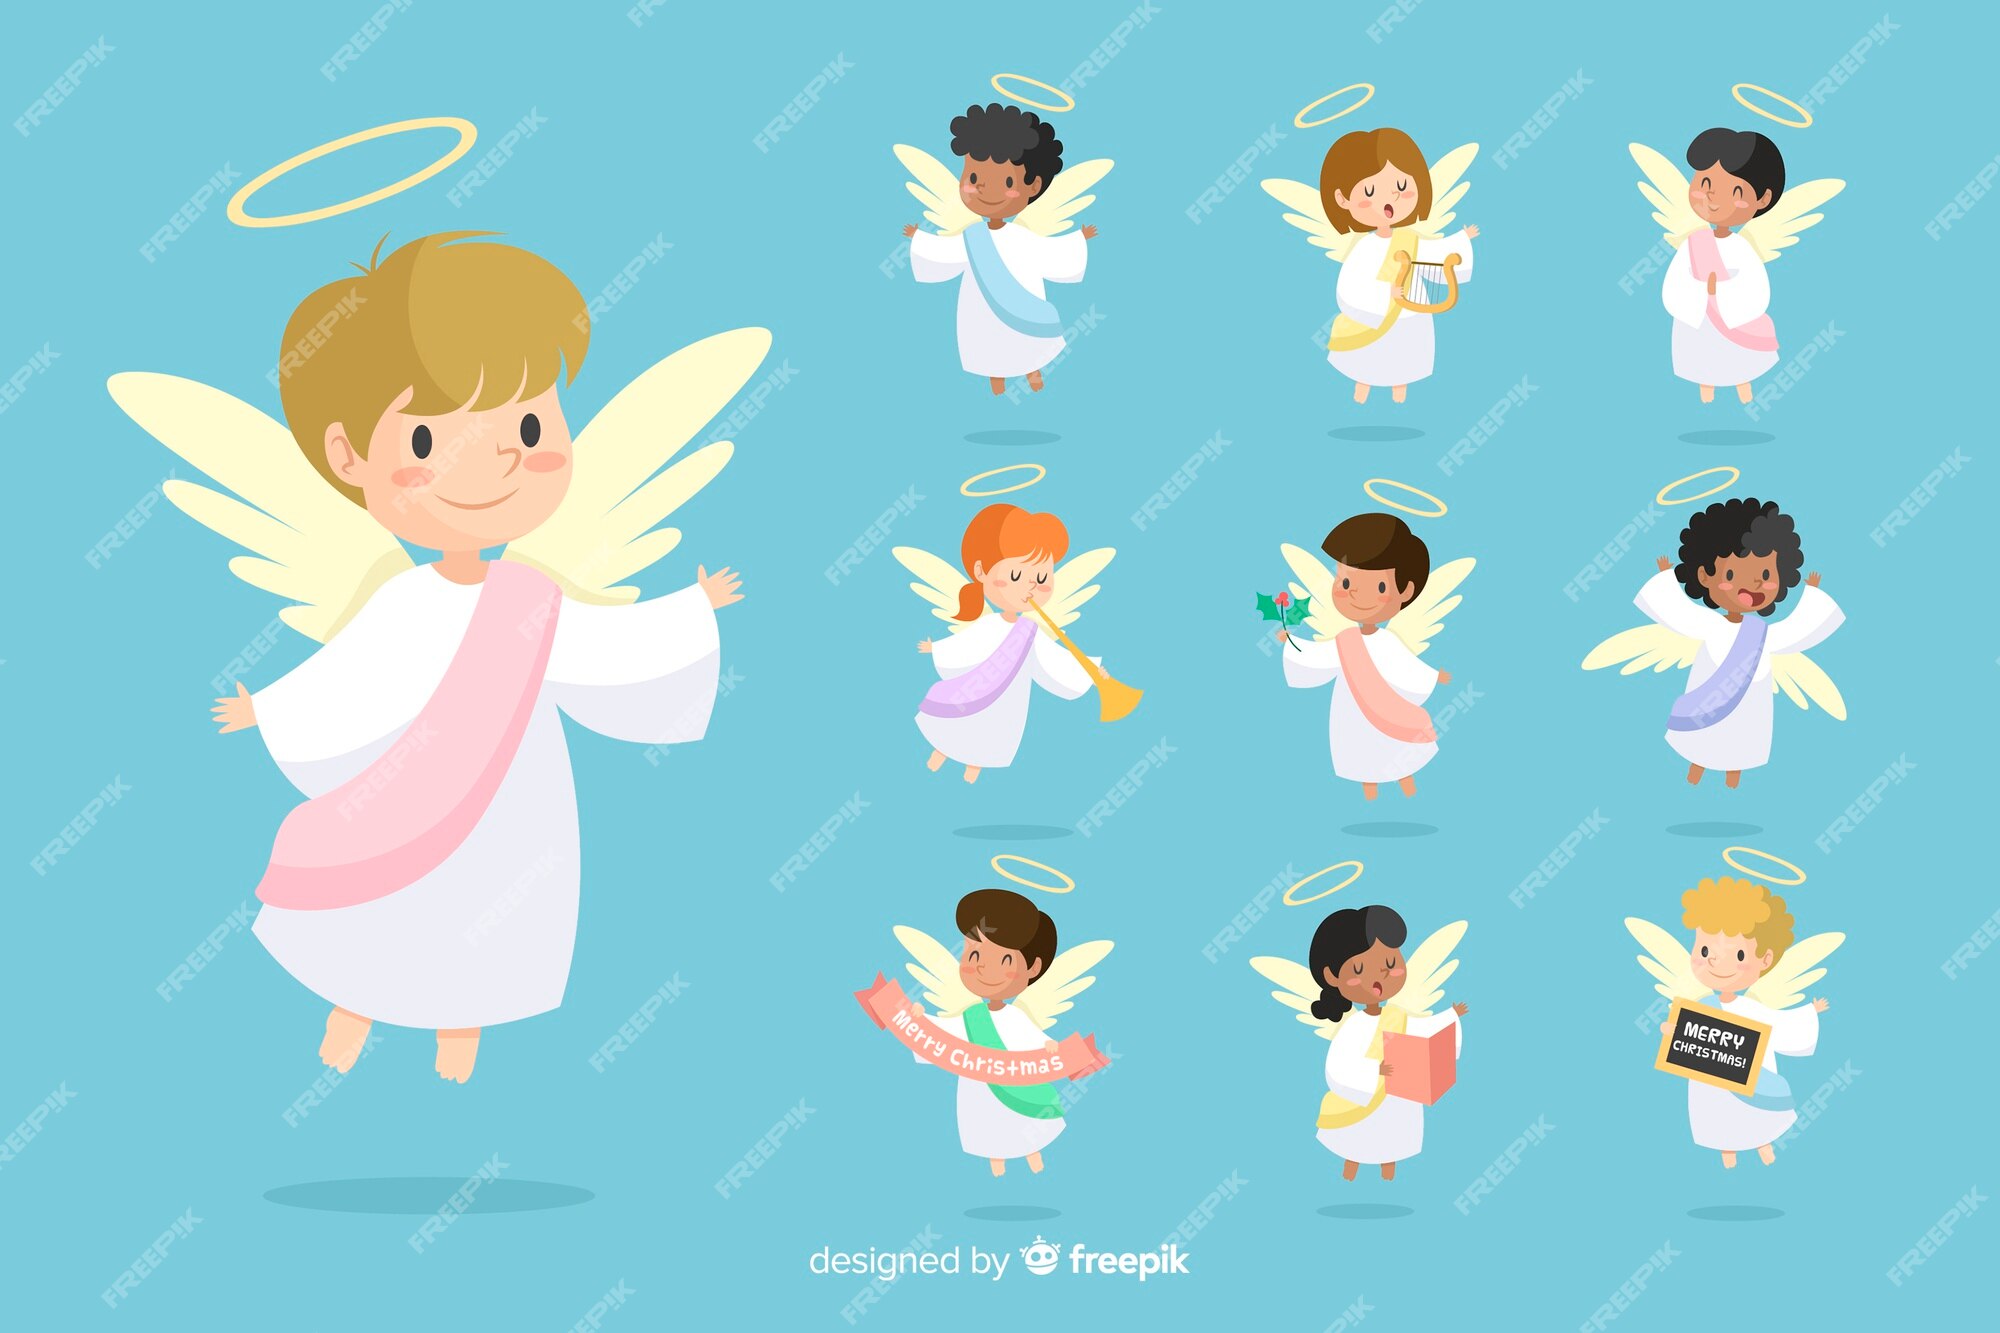 Cute Angel Images - Free Download on Freepik